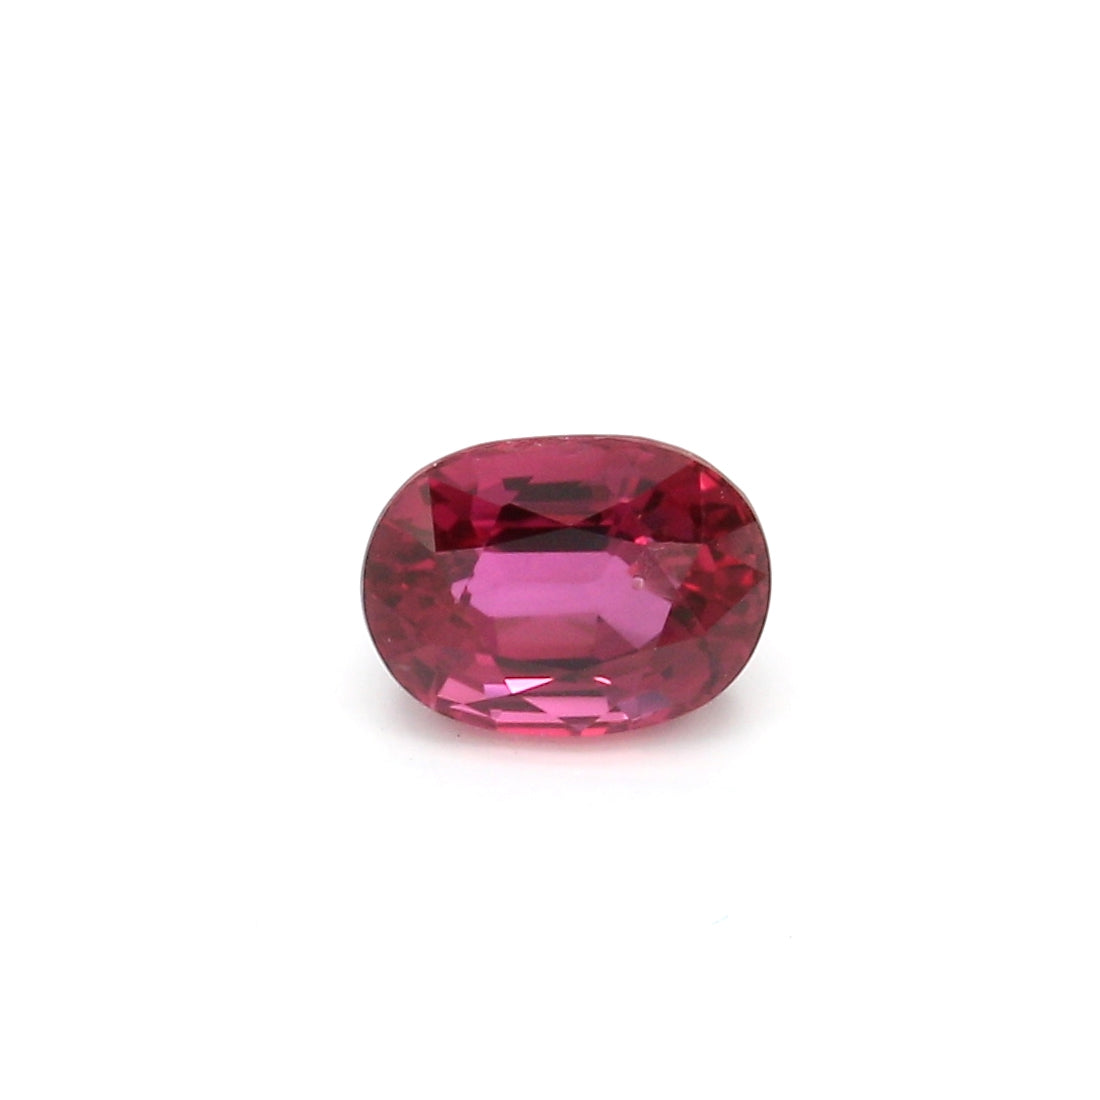 1.06ct Purplish Pink, Oval Sapphire, Heated, Thailand - 6.51 x 4.89 x 3.73mm